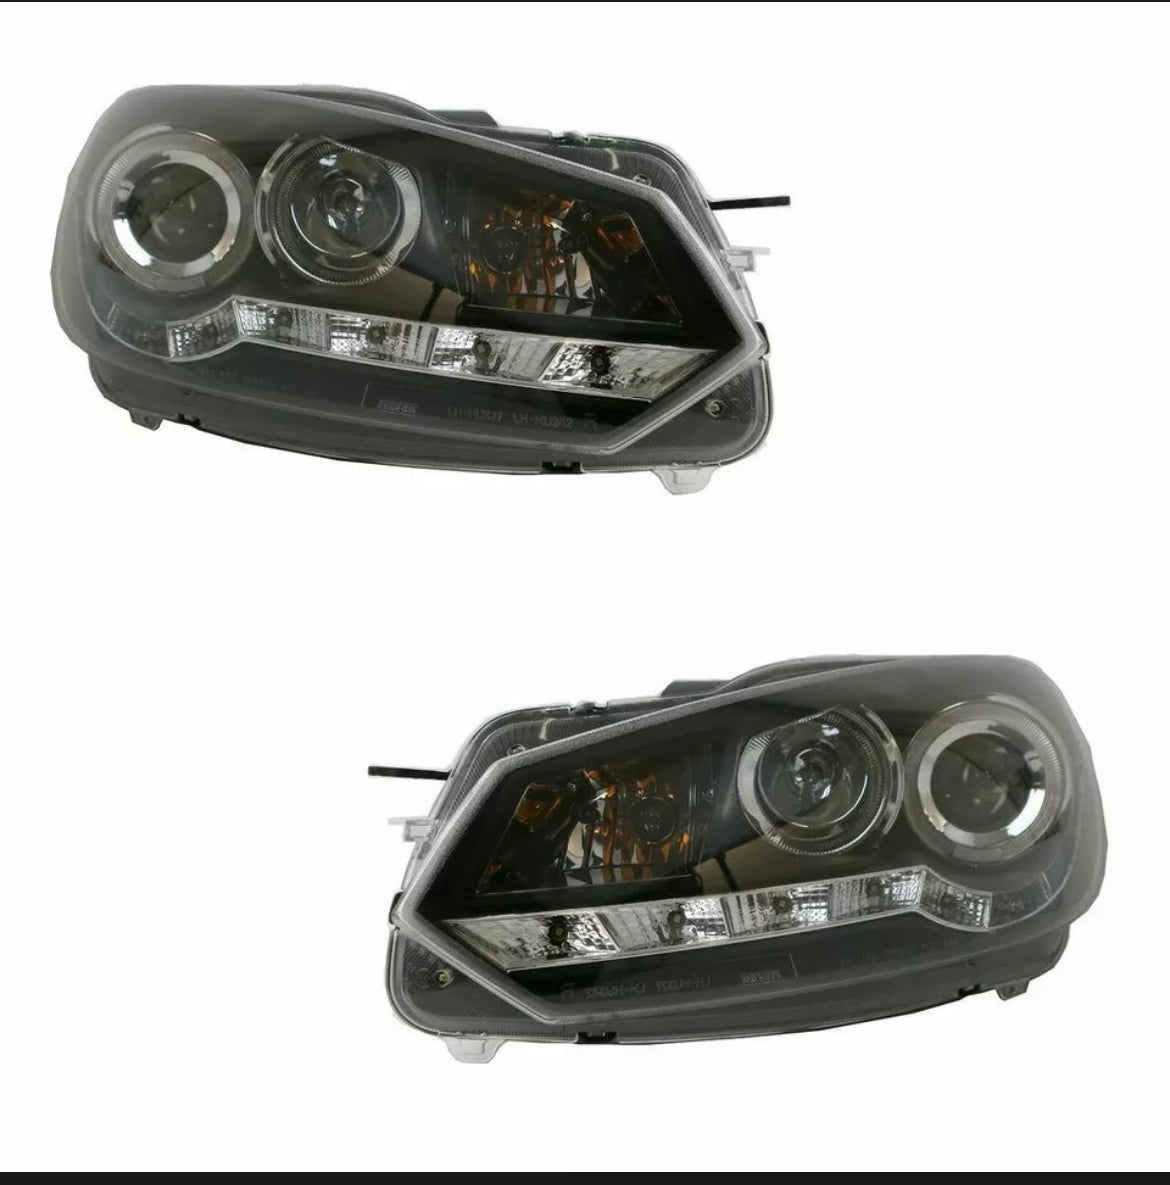 Golf 6 R8 led headlights